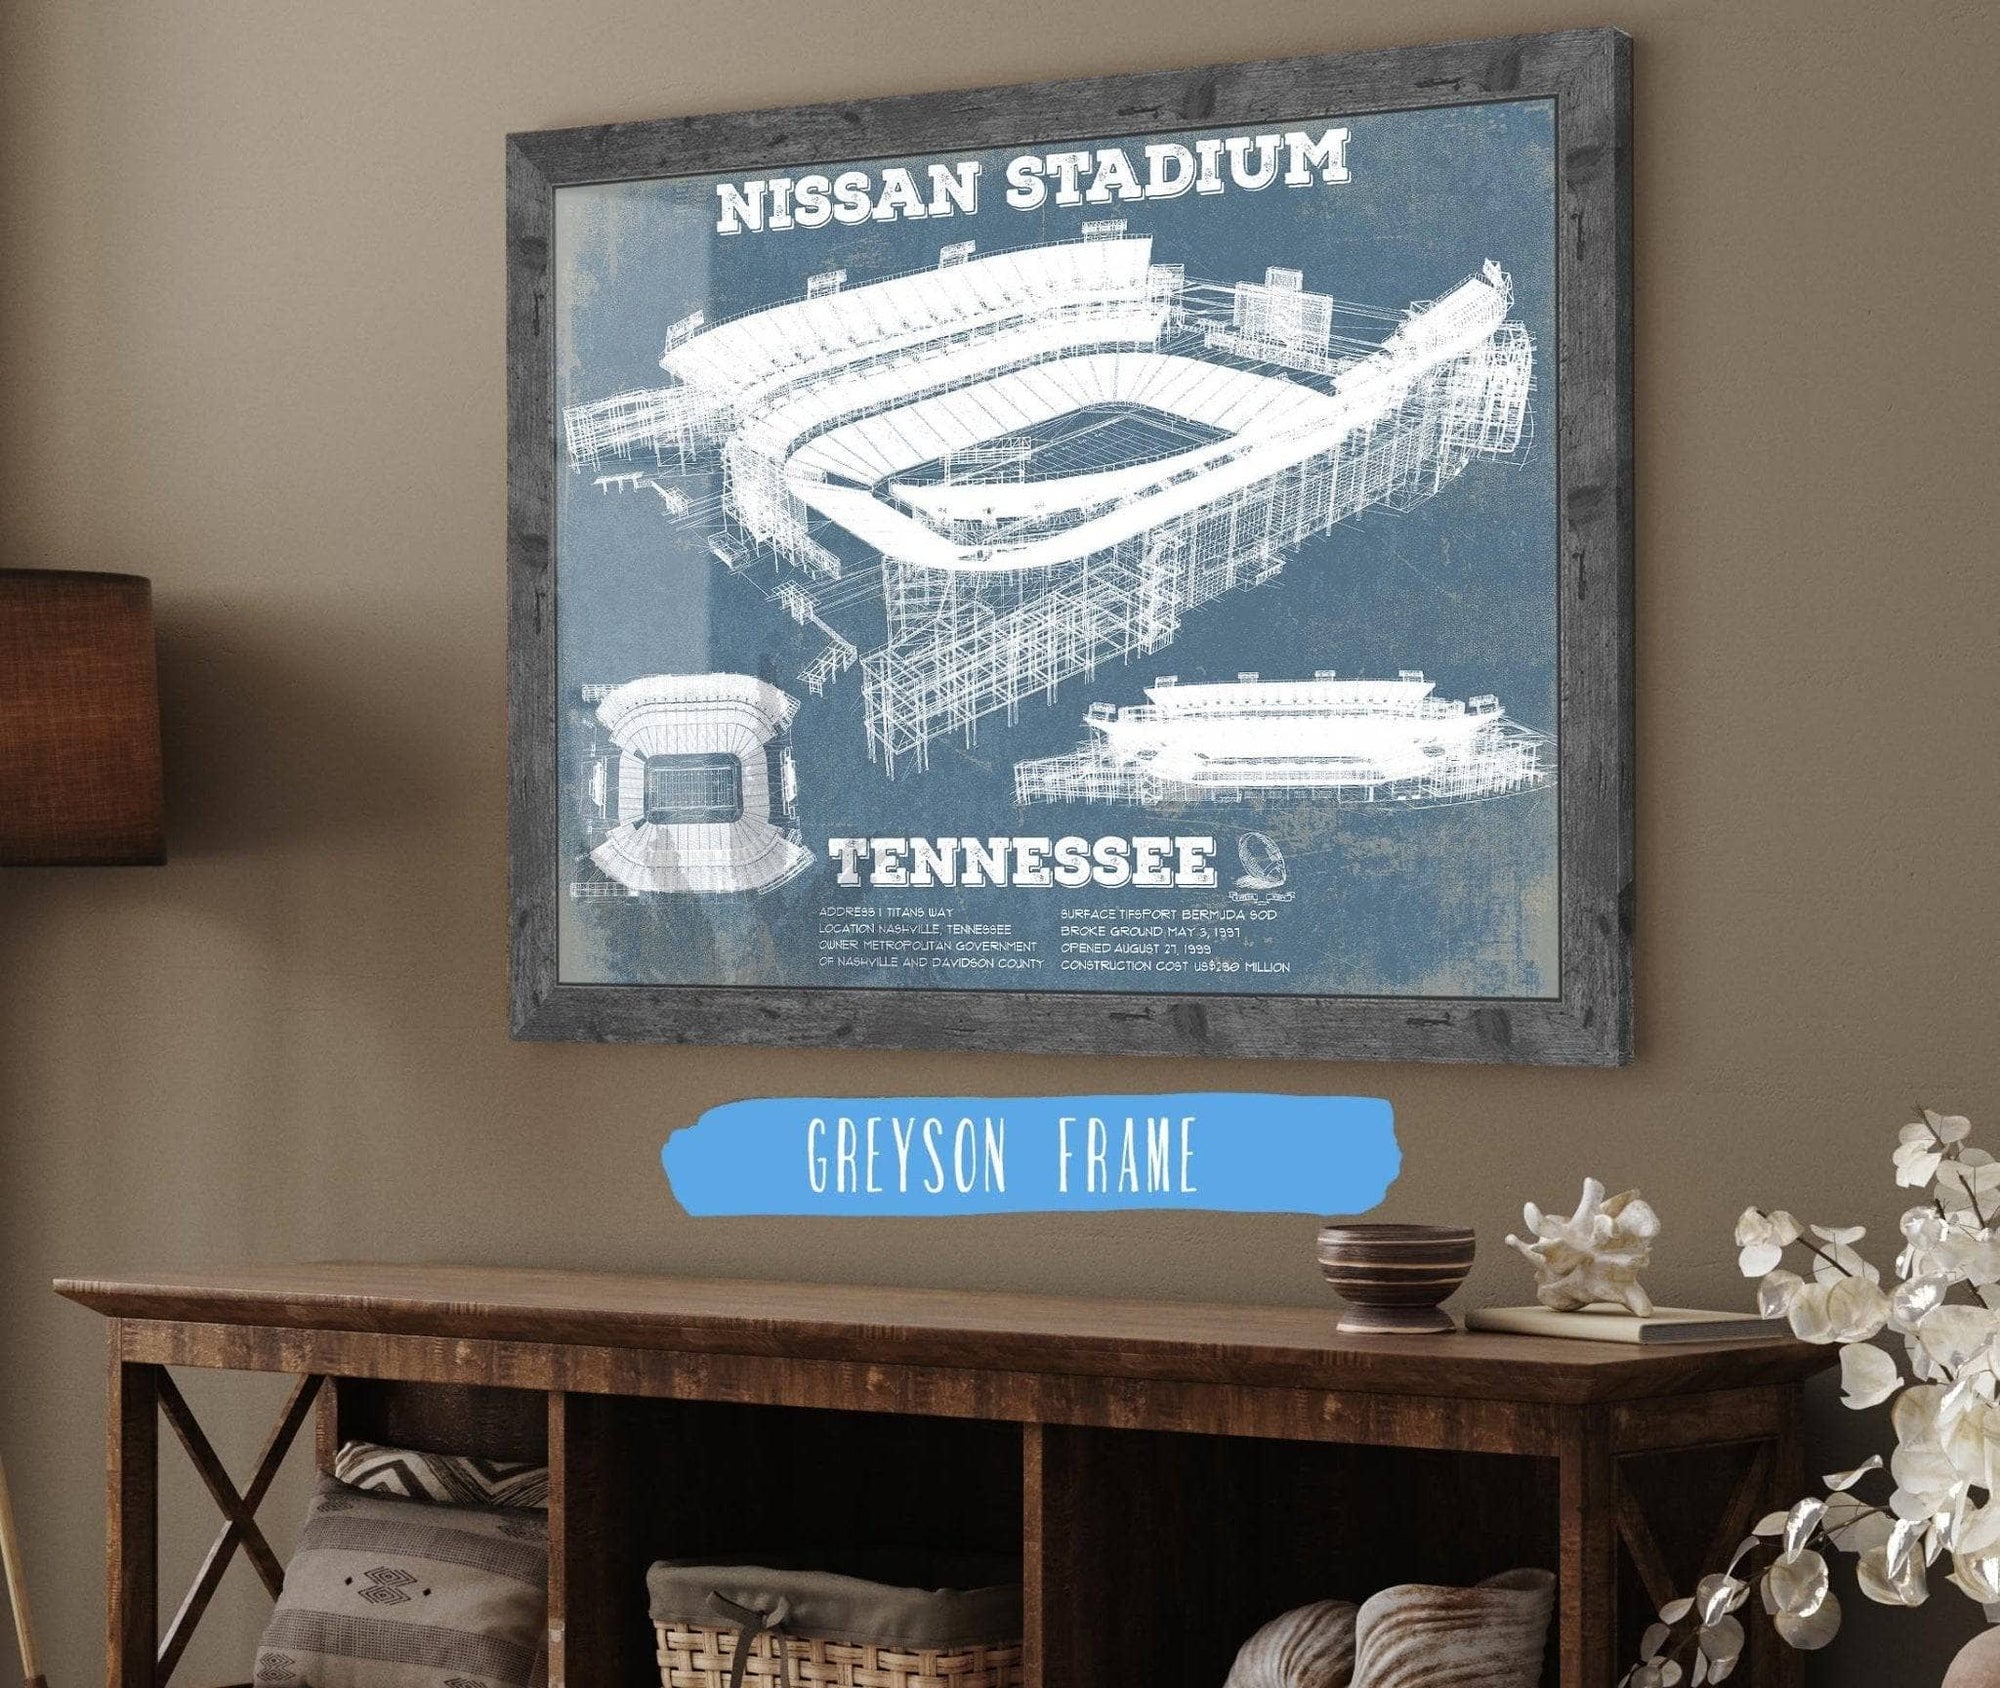 Cutler West Pro Football Collection 14" x 11" / Greyson Frame Tennessee Titans Nissan Stadium - Vintage Football Print 723971122_70962